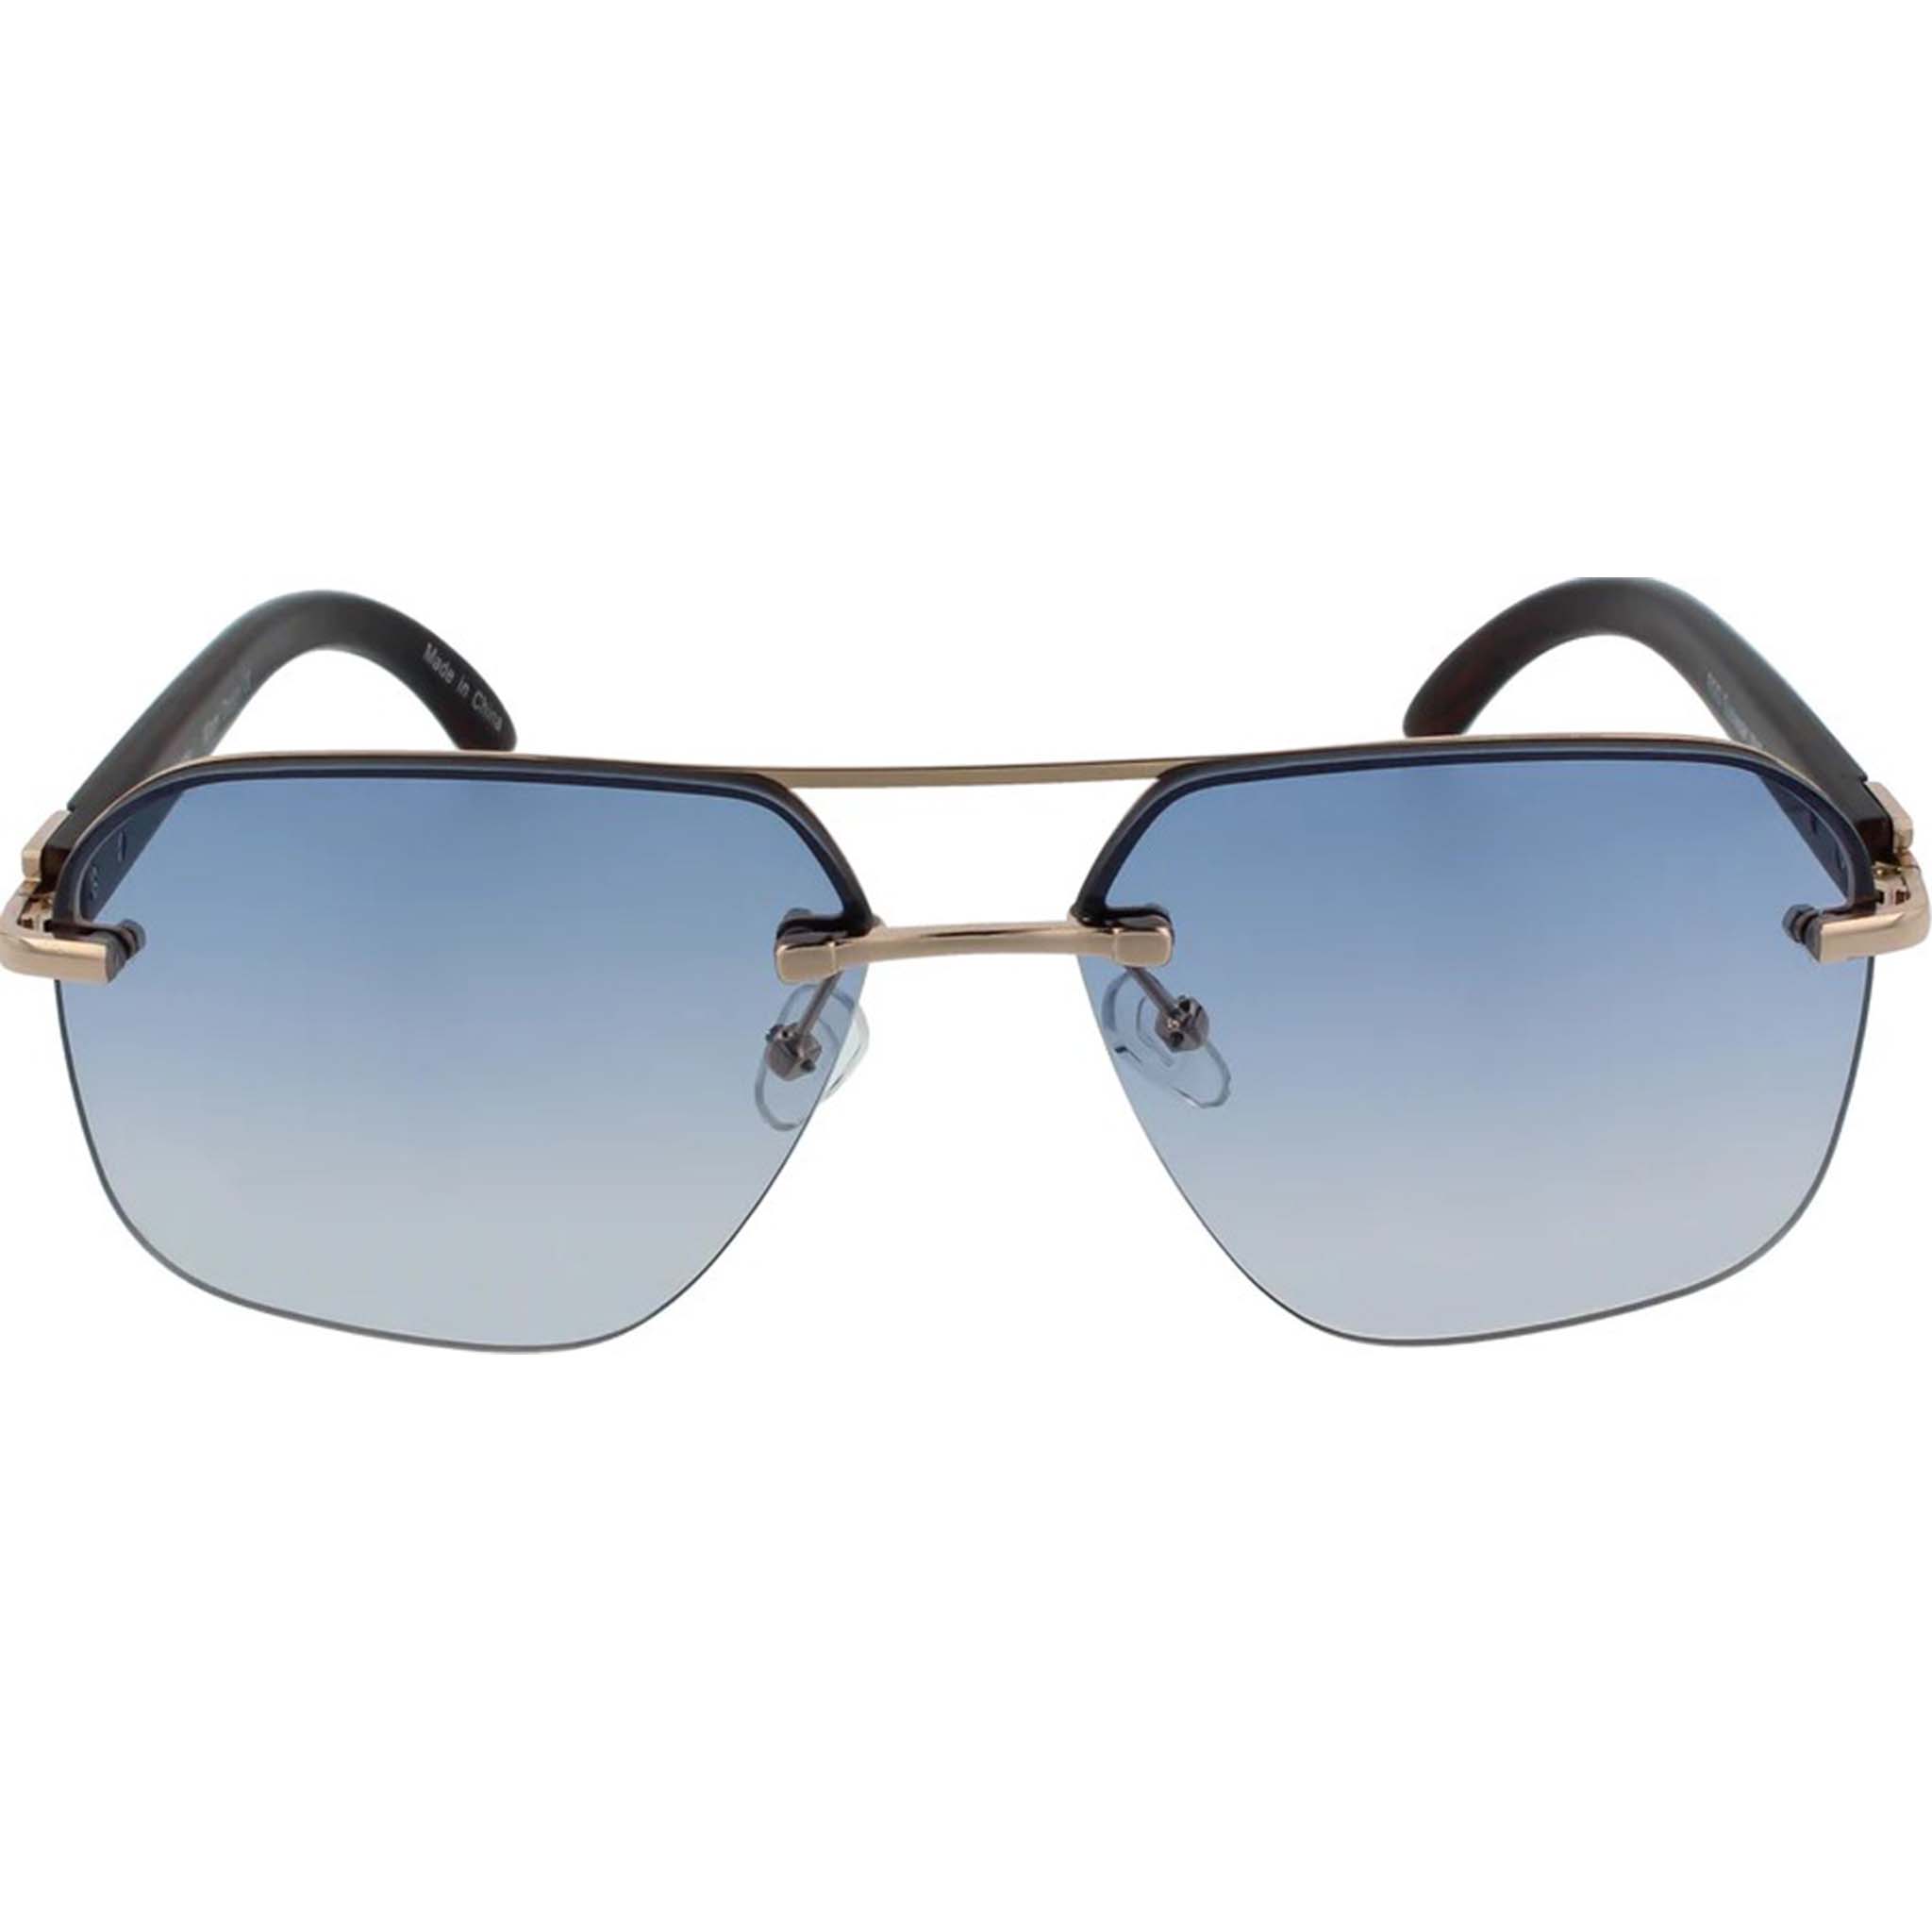 Ego Fashion Sunglasses DKFL3347